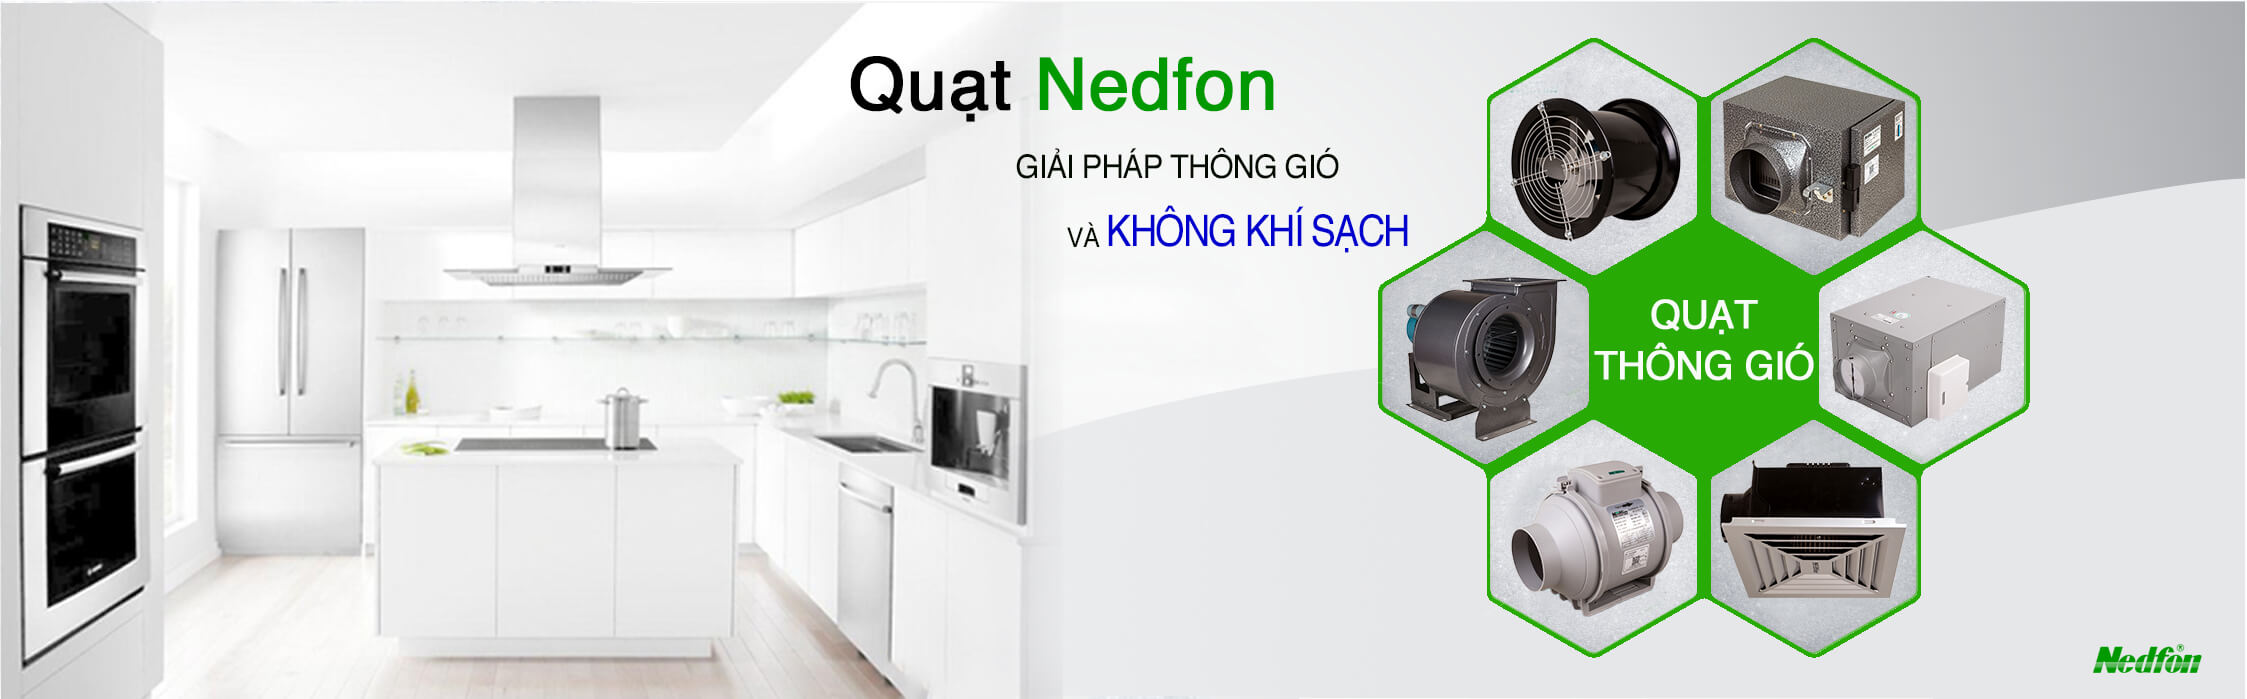 quat-thong-gio-nedfon-banner4